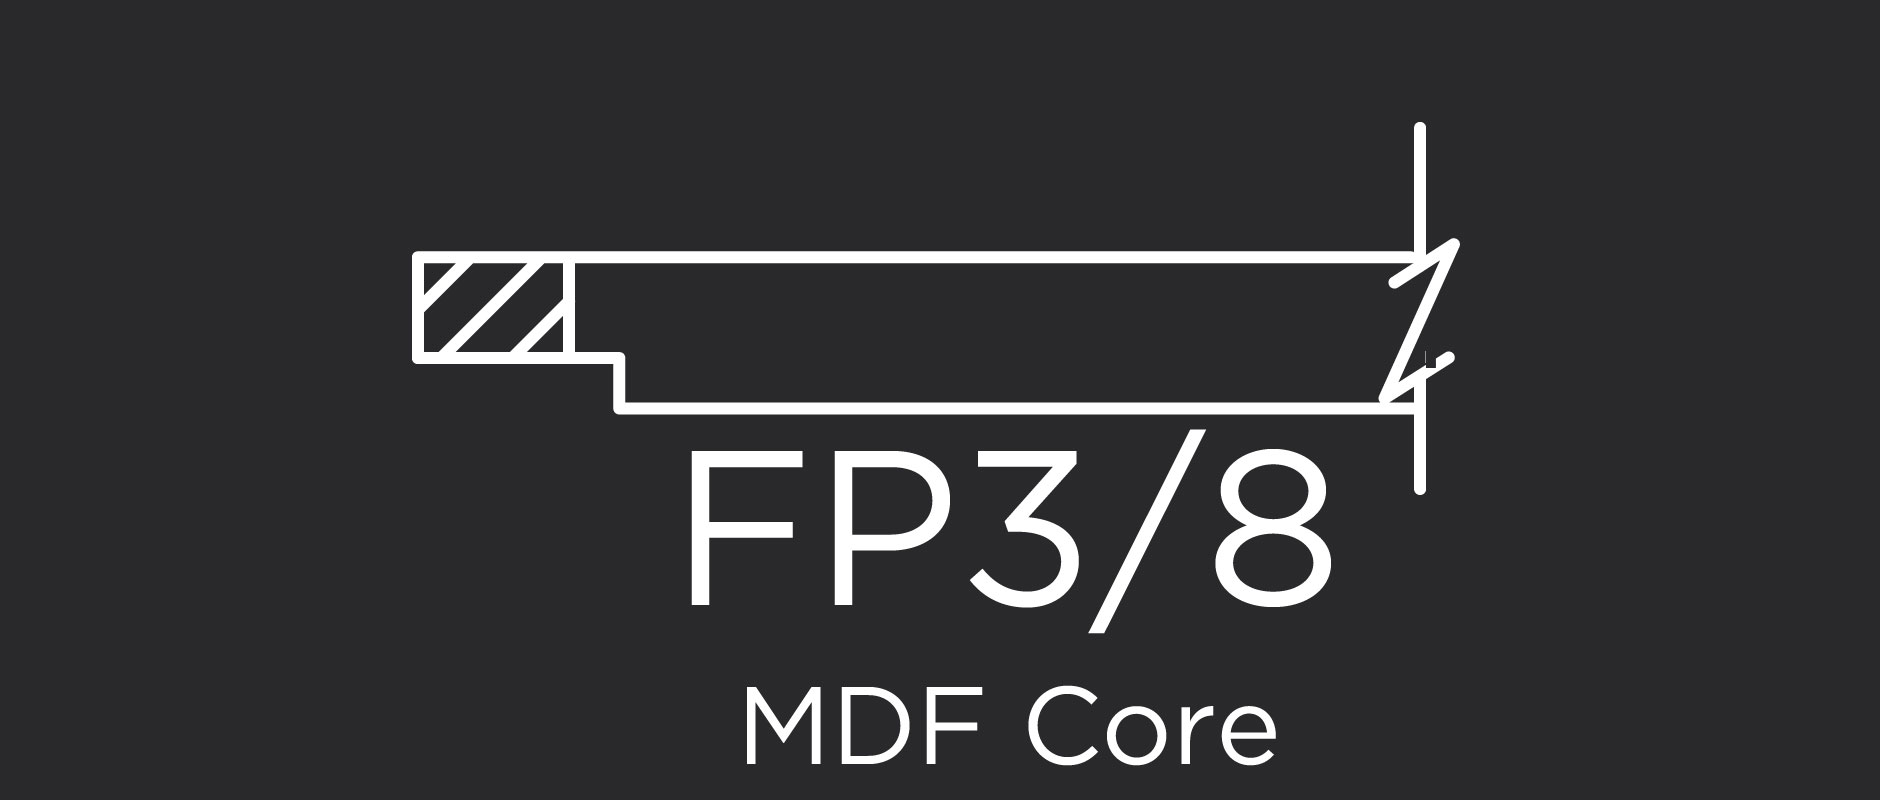 FP3/8 MDF core flat panel